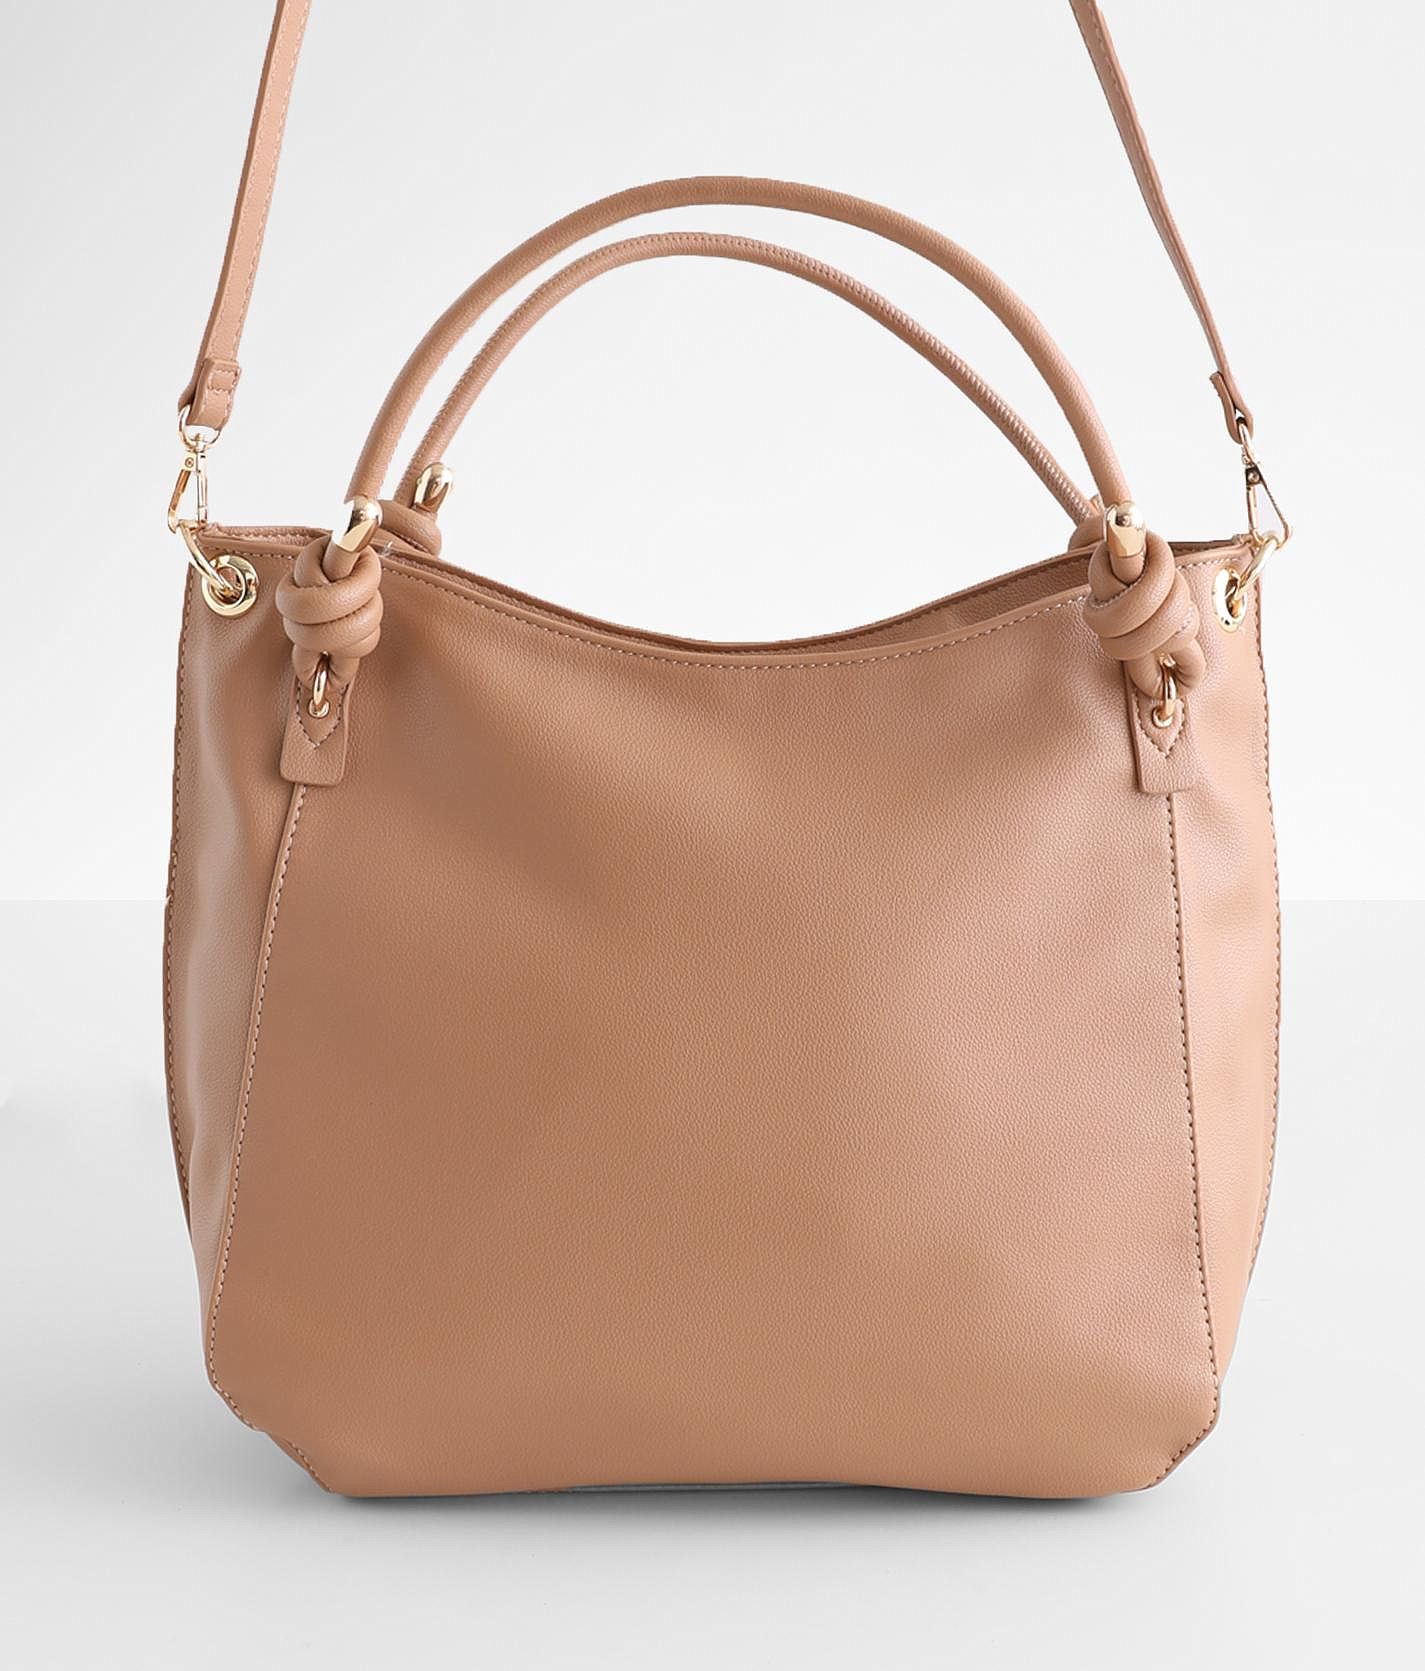 Moda Luxe Tan Leather Fringe Handbag W/ Detachable Strap